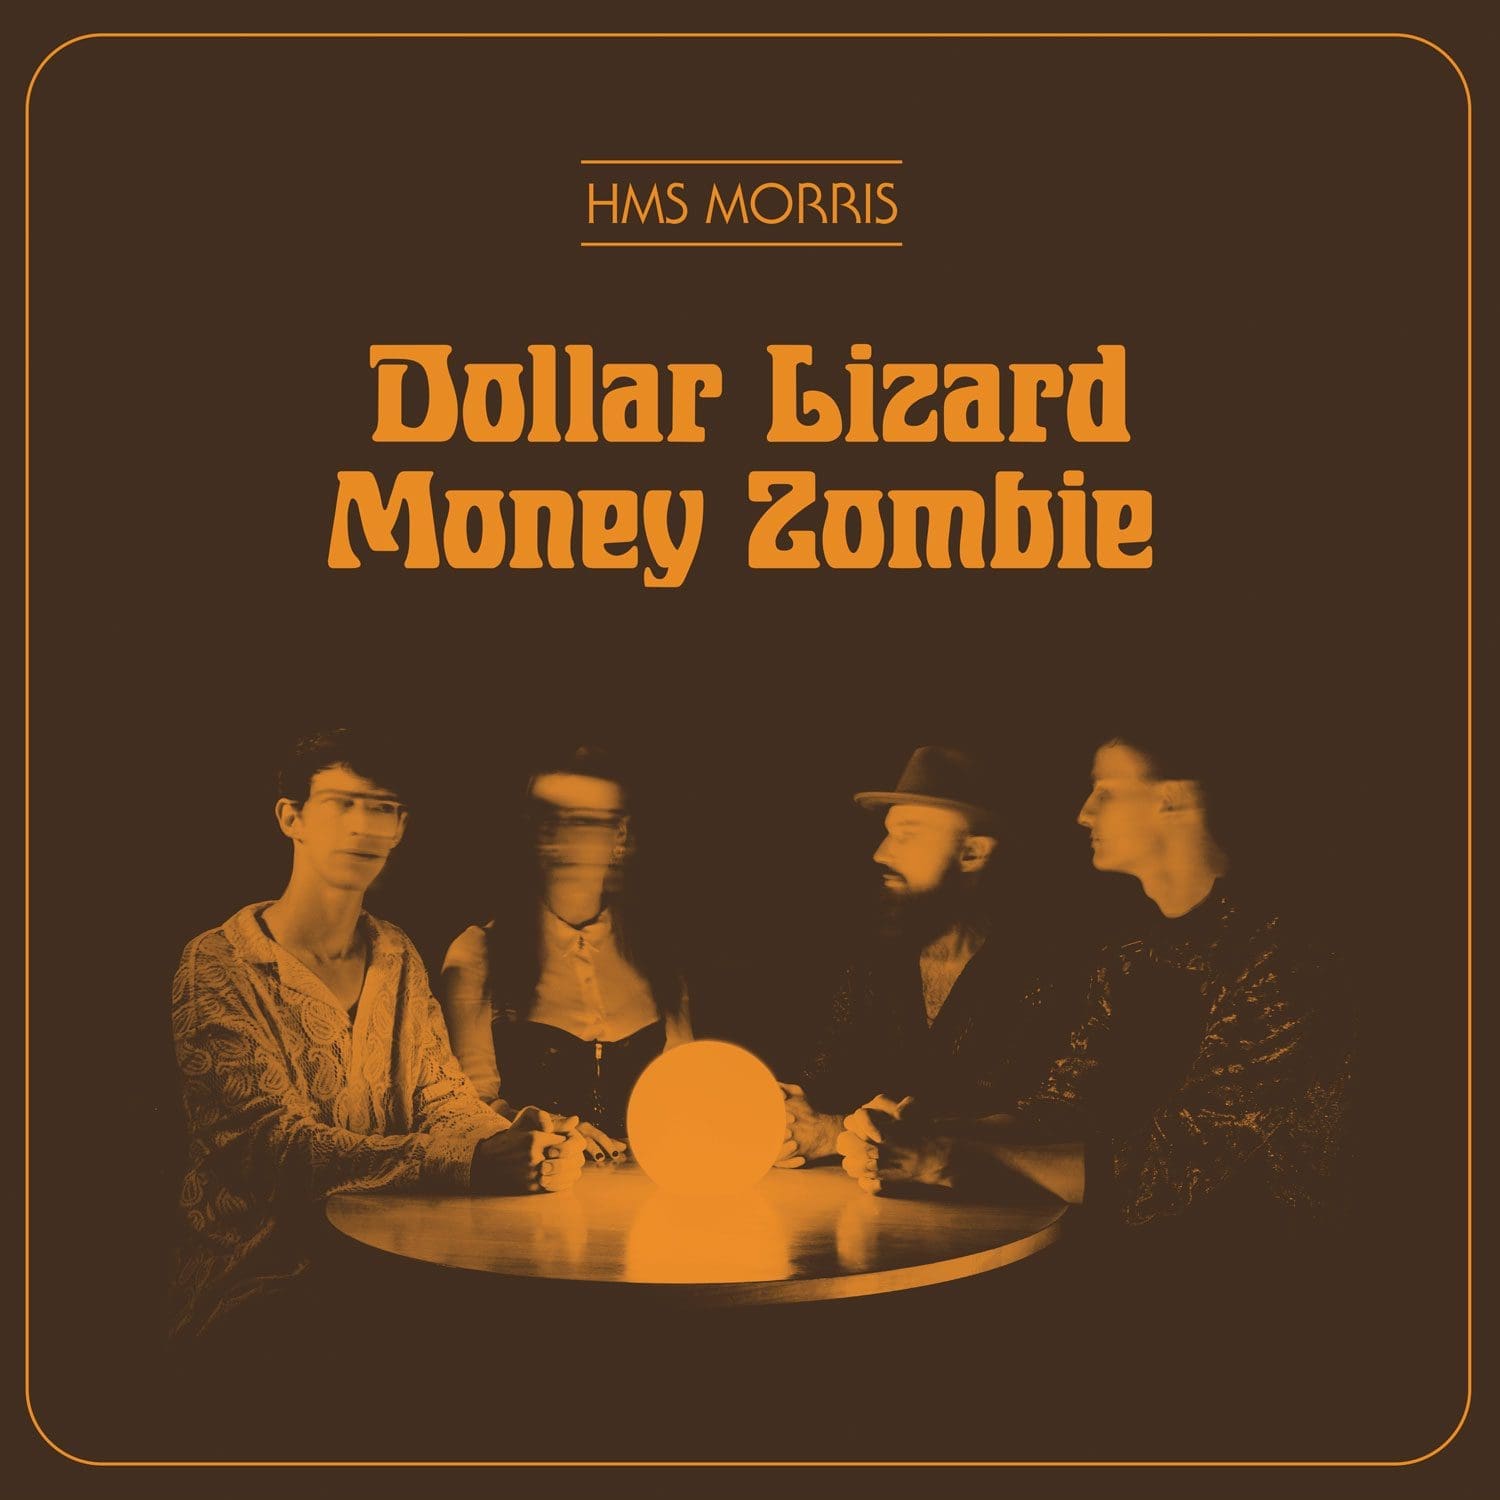 HMS Morris - Dollar Lizard Money Zombie